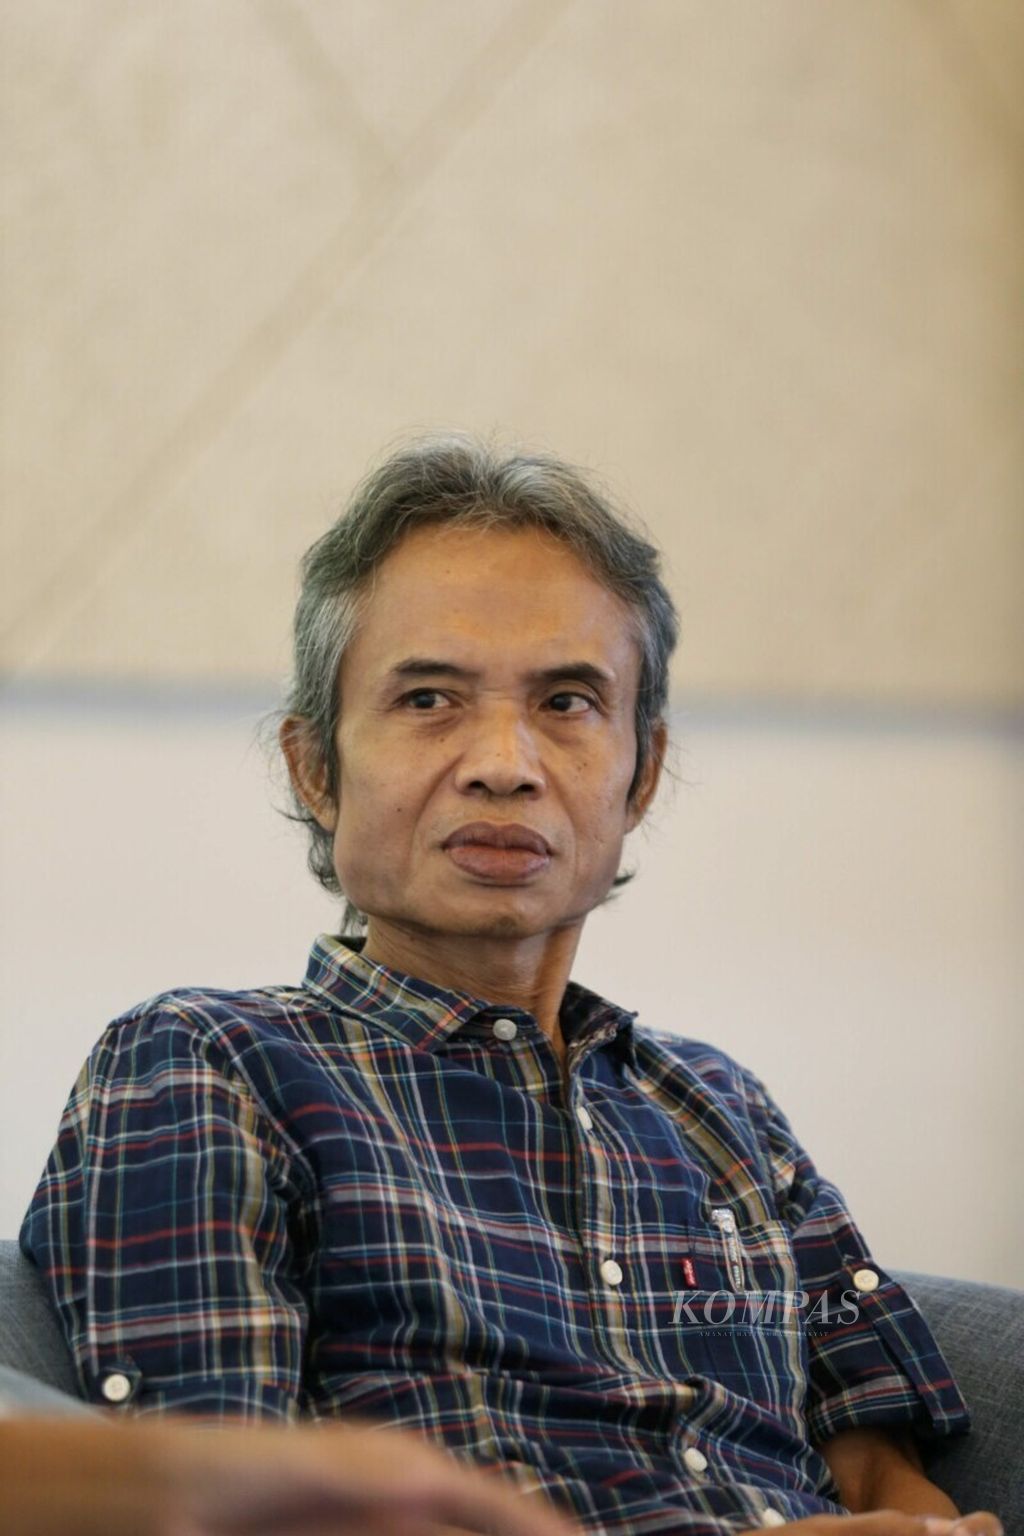 Writer Joko Pinurbo visited the Kompas editorial board in Jakarta on June 28 2019.